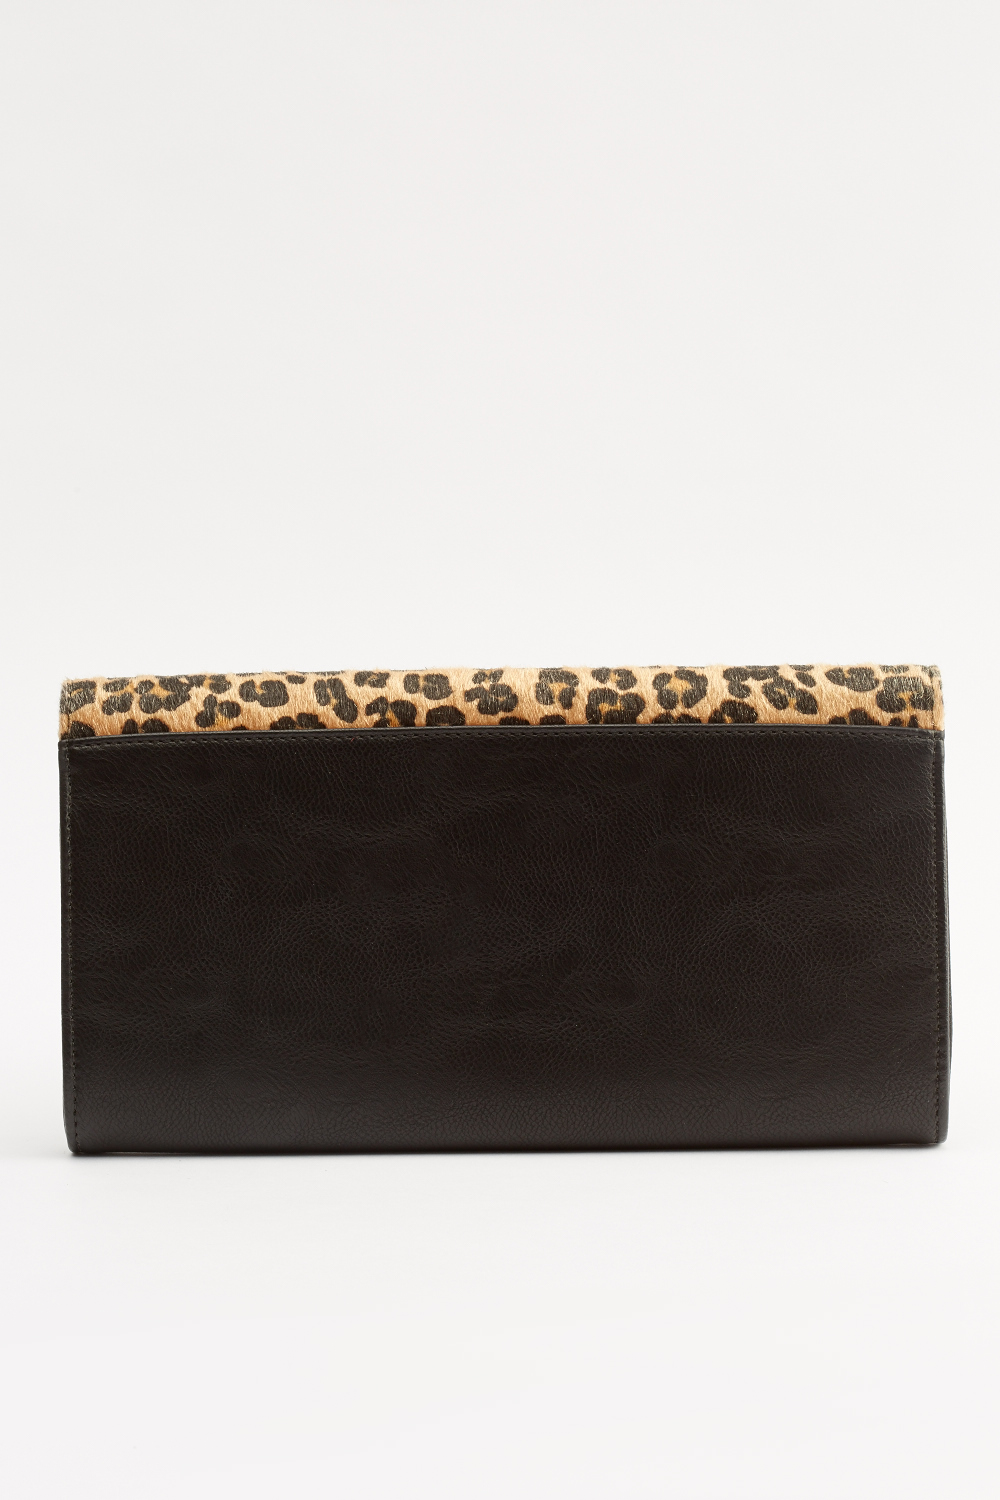 Leopard Print Clutch Bag - Just $6